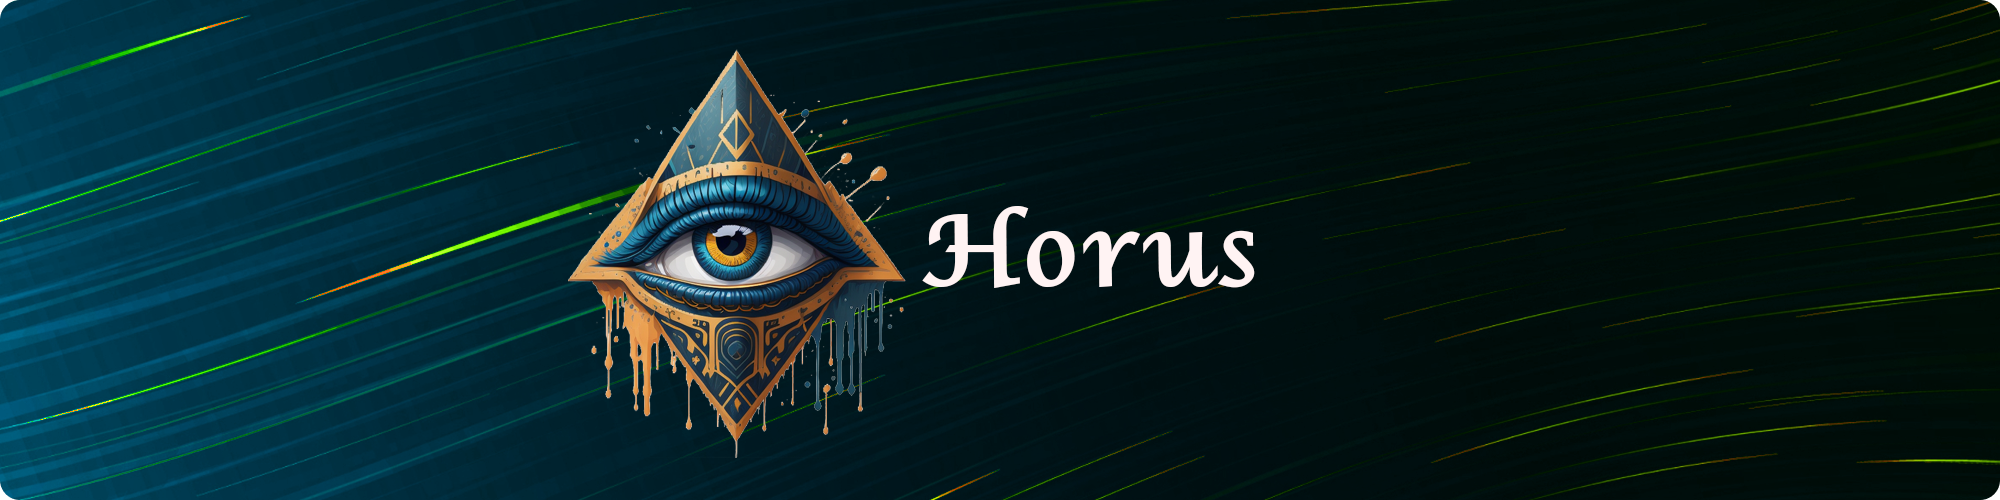 horus banner